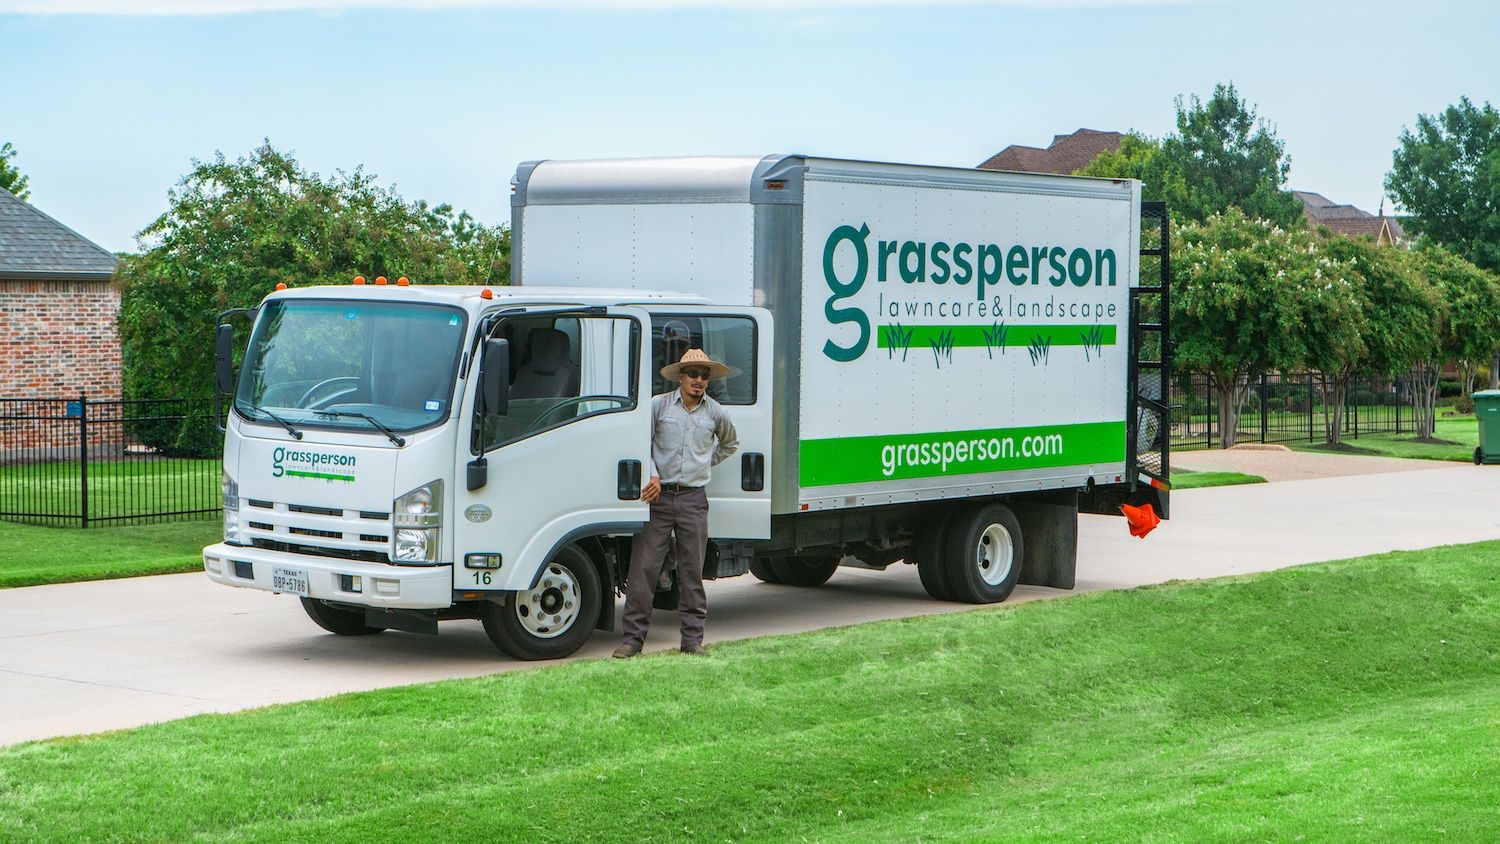 Grassperson vs. Chorbie: Comparing Lawn Services in Frisco, TX